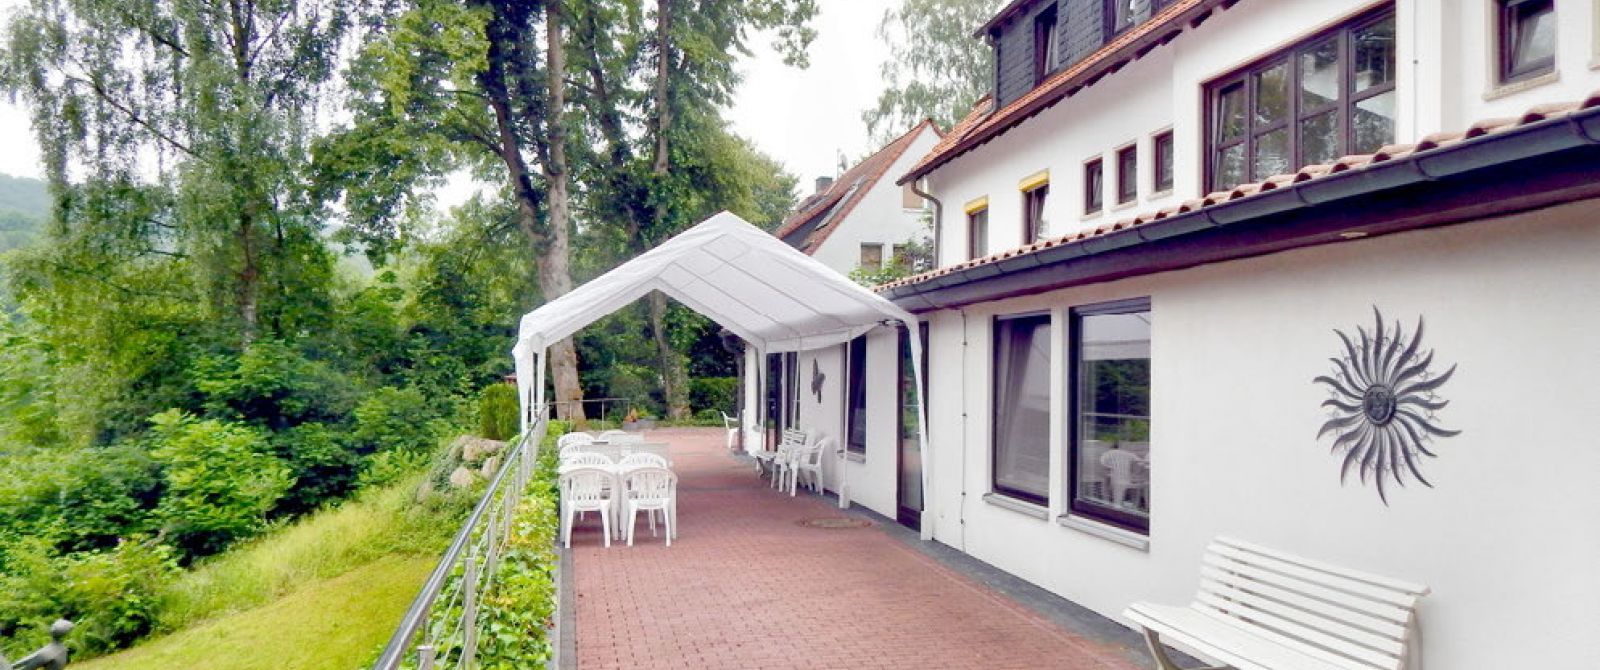 Residenz am Osterbergsee, Bad Gandersheim